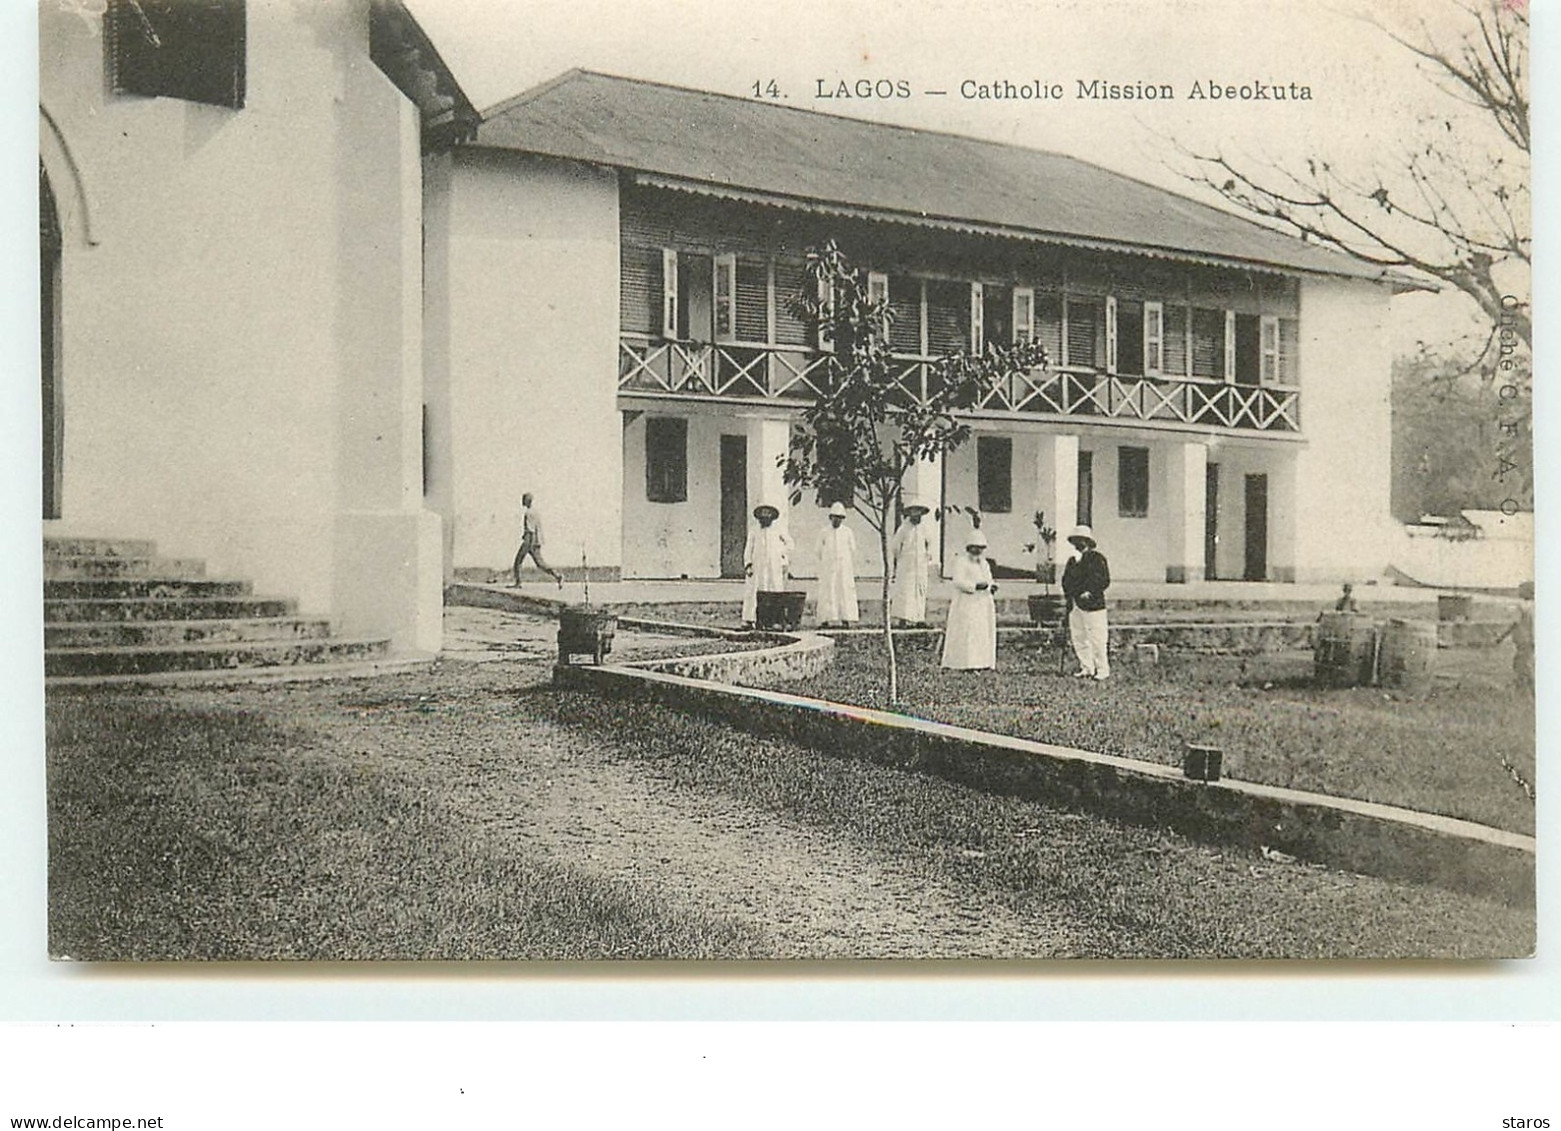 LAGOS - Catholic Mission Abeokuta - Nigeria